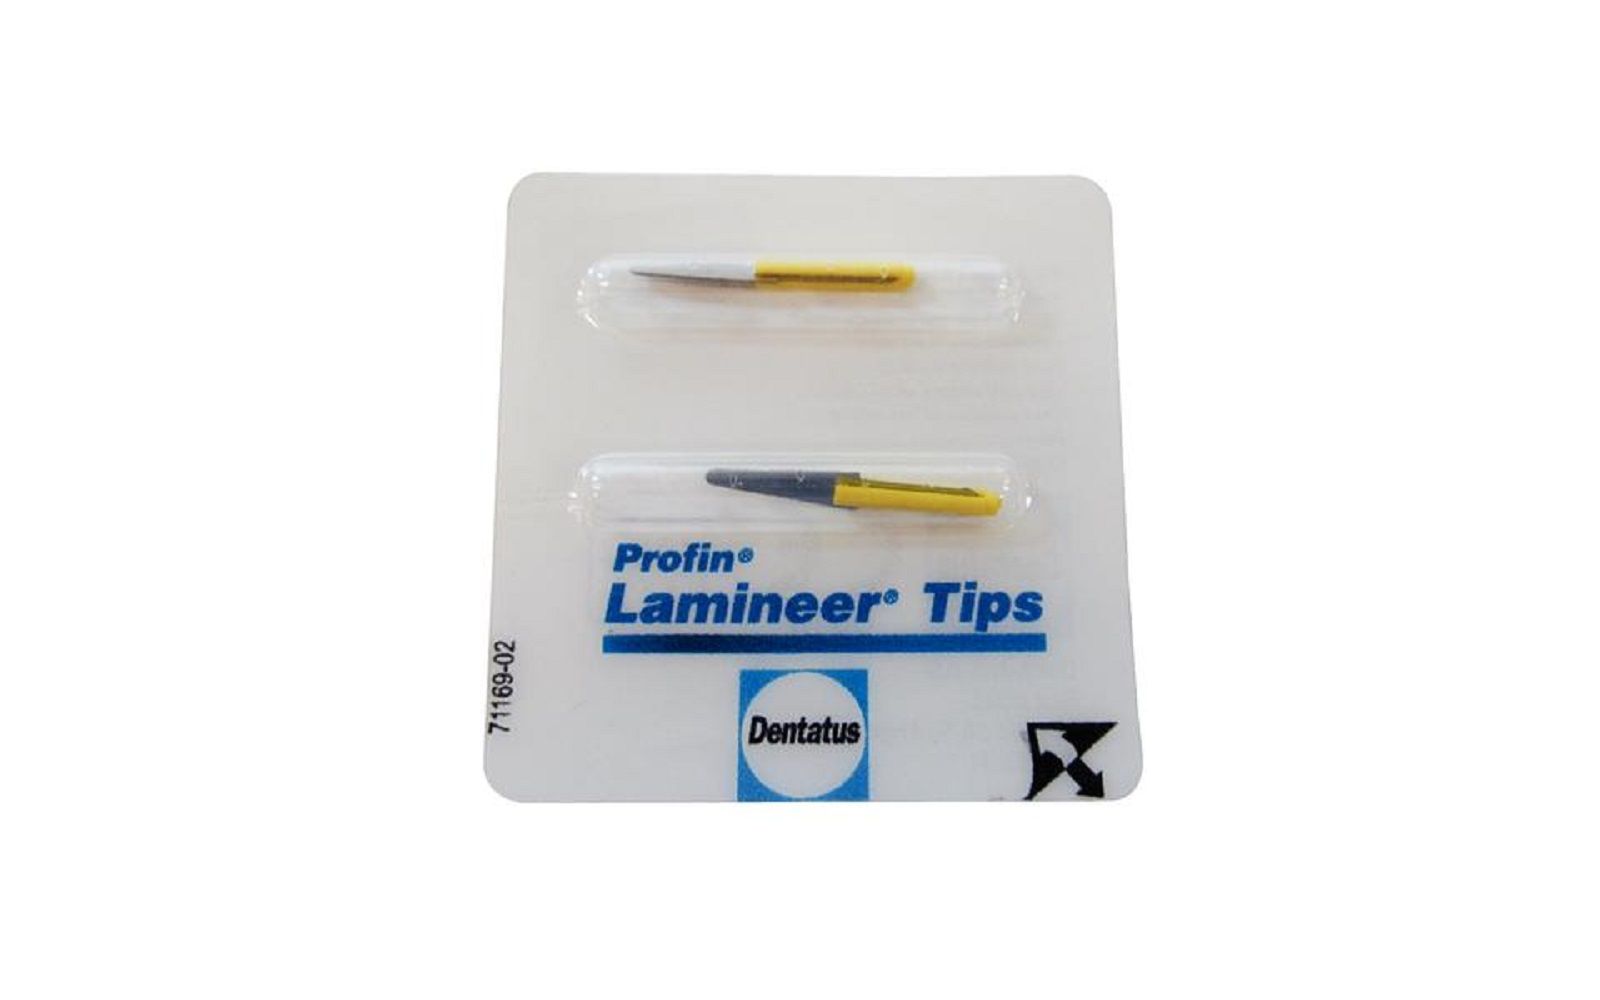 Profin® lamineer® tips – thin spatula - dentatus usa ltd